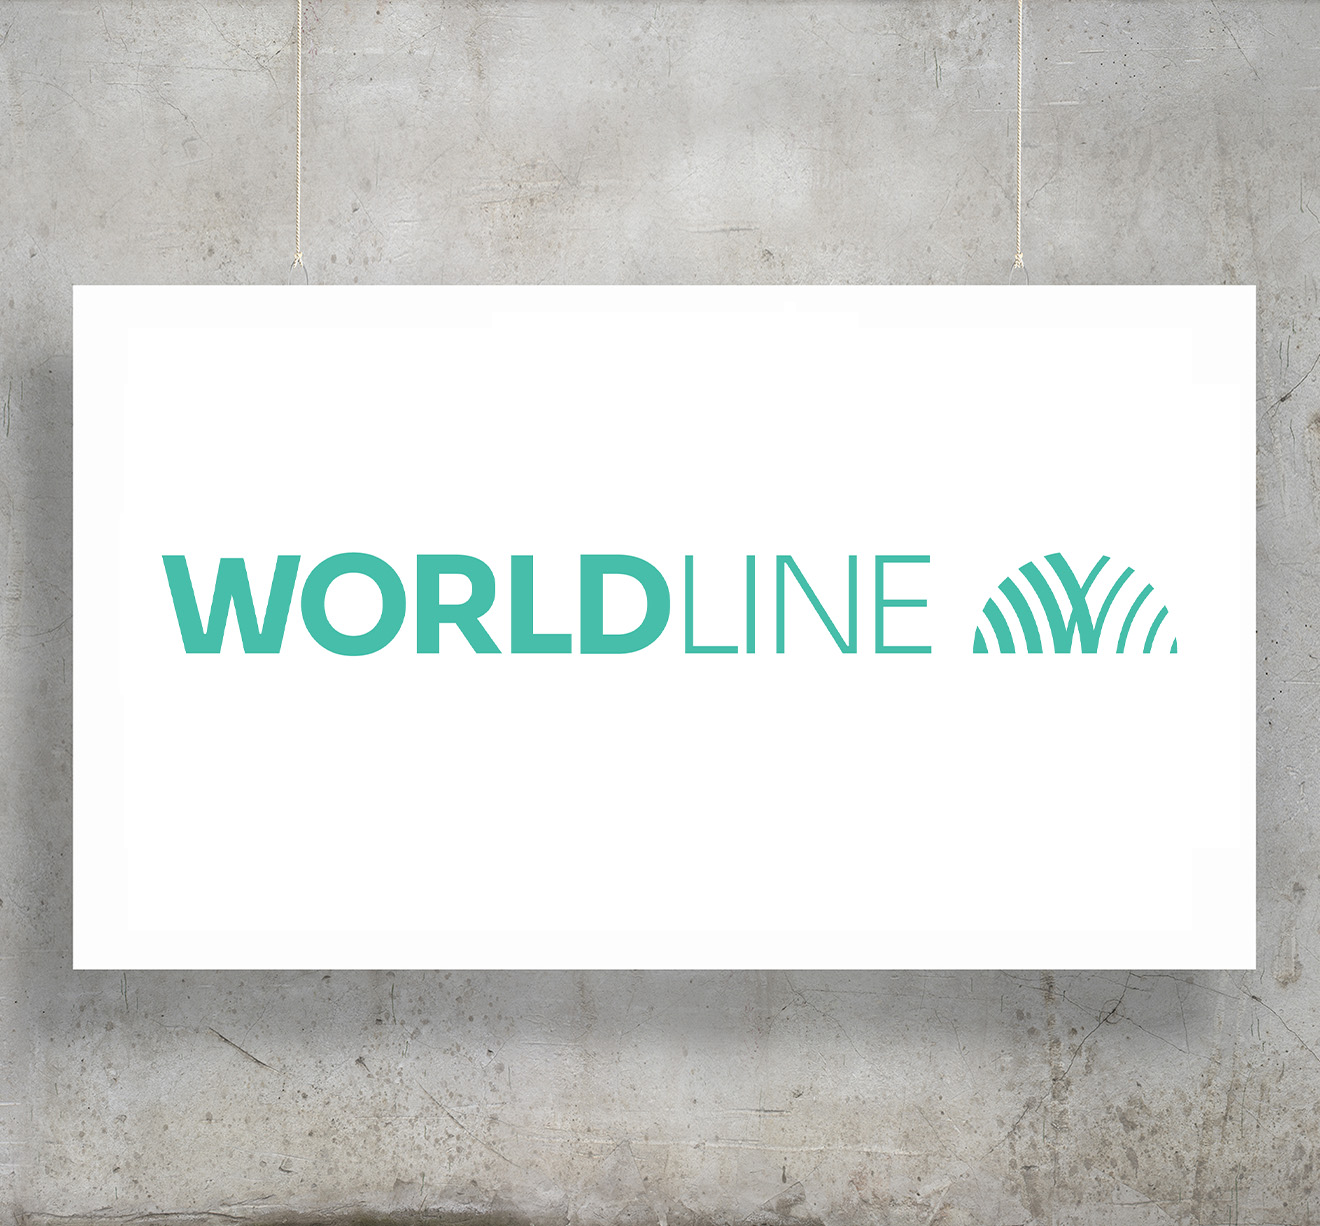 Worldline co profile